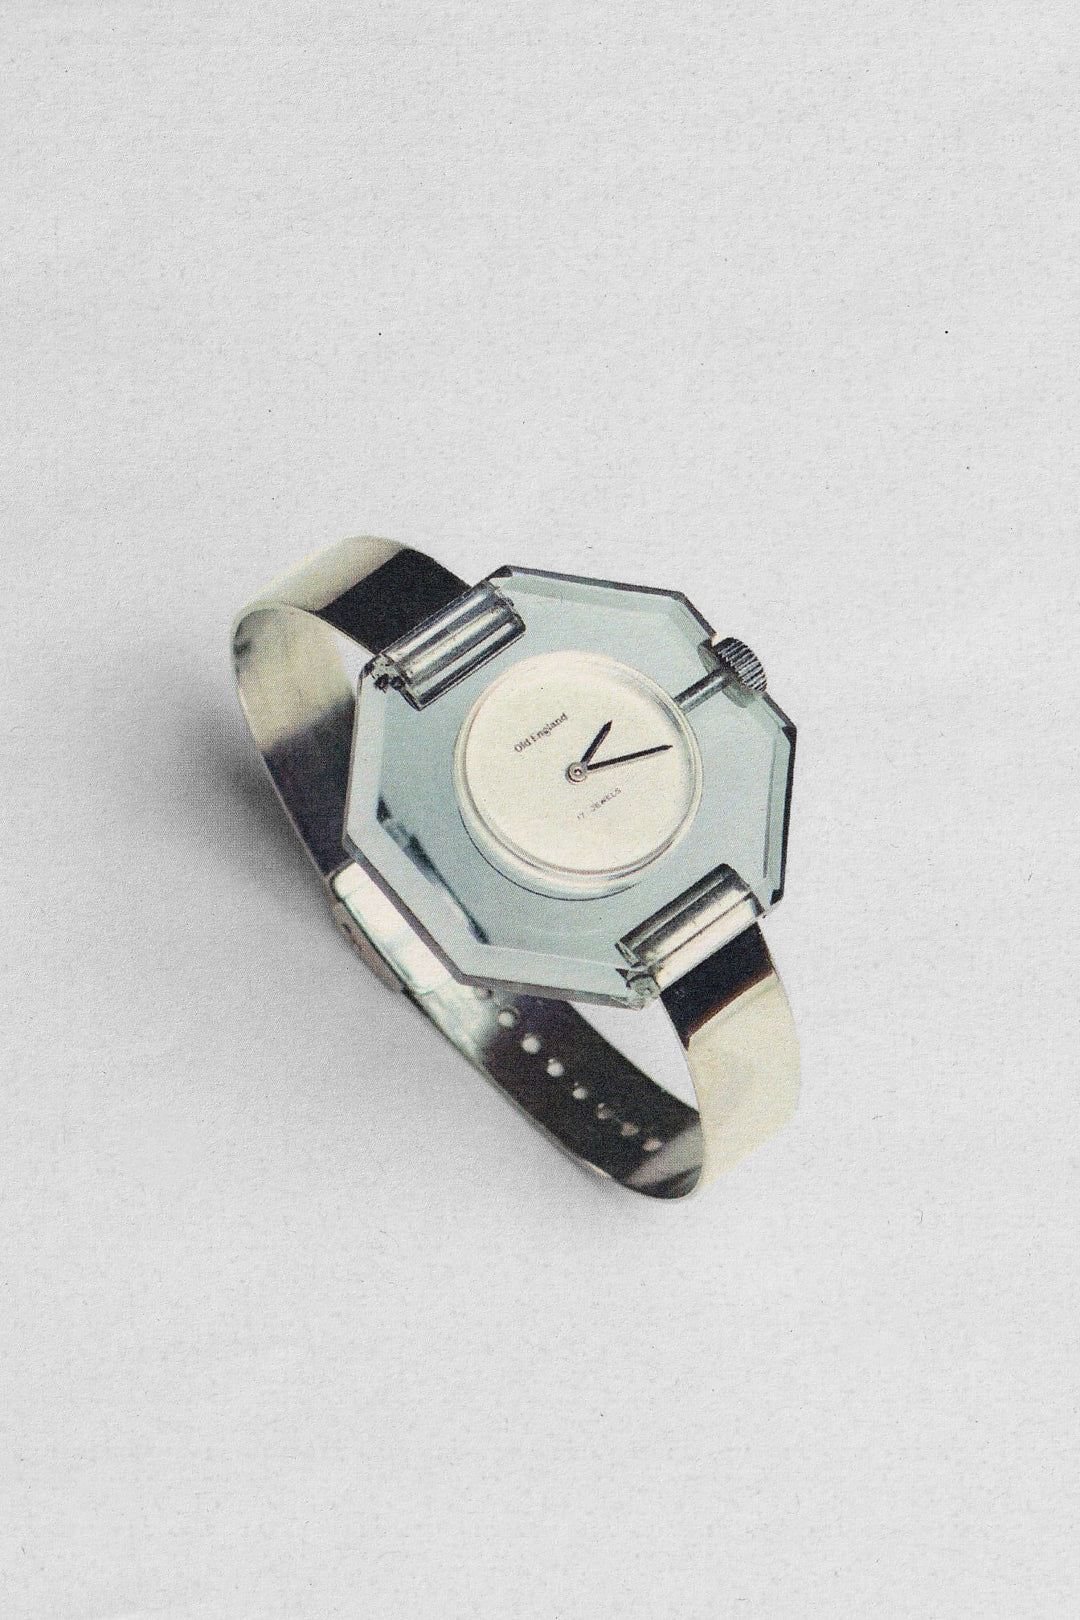 Vintage Modernist Perspex & Silver Watch